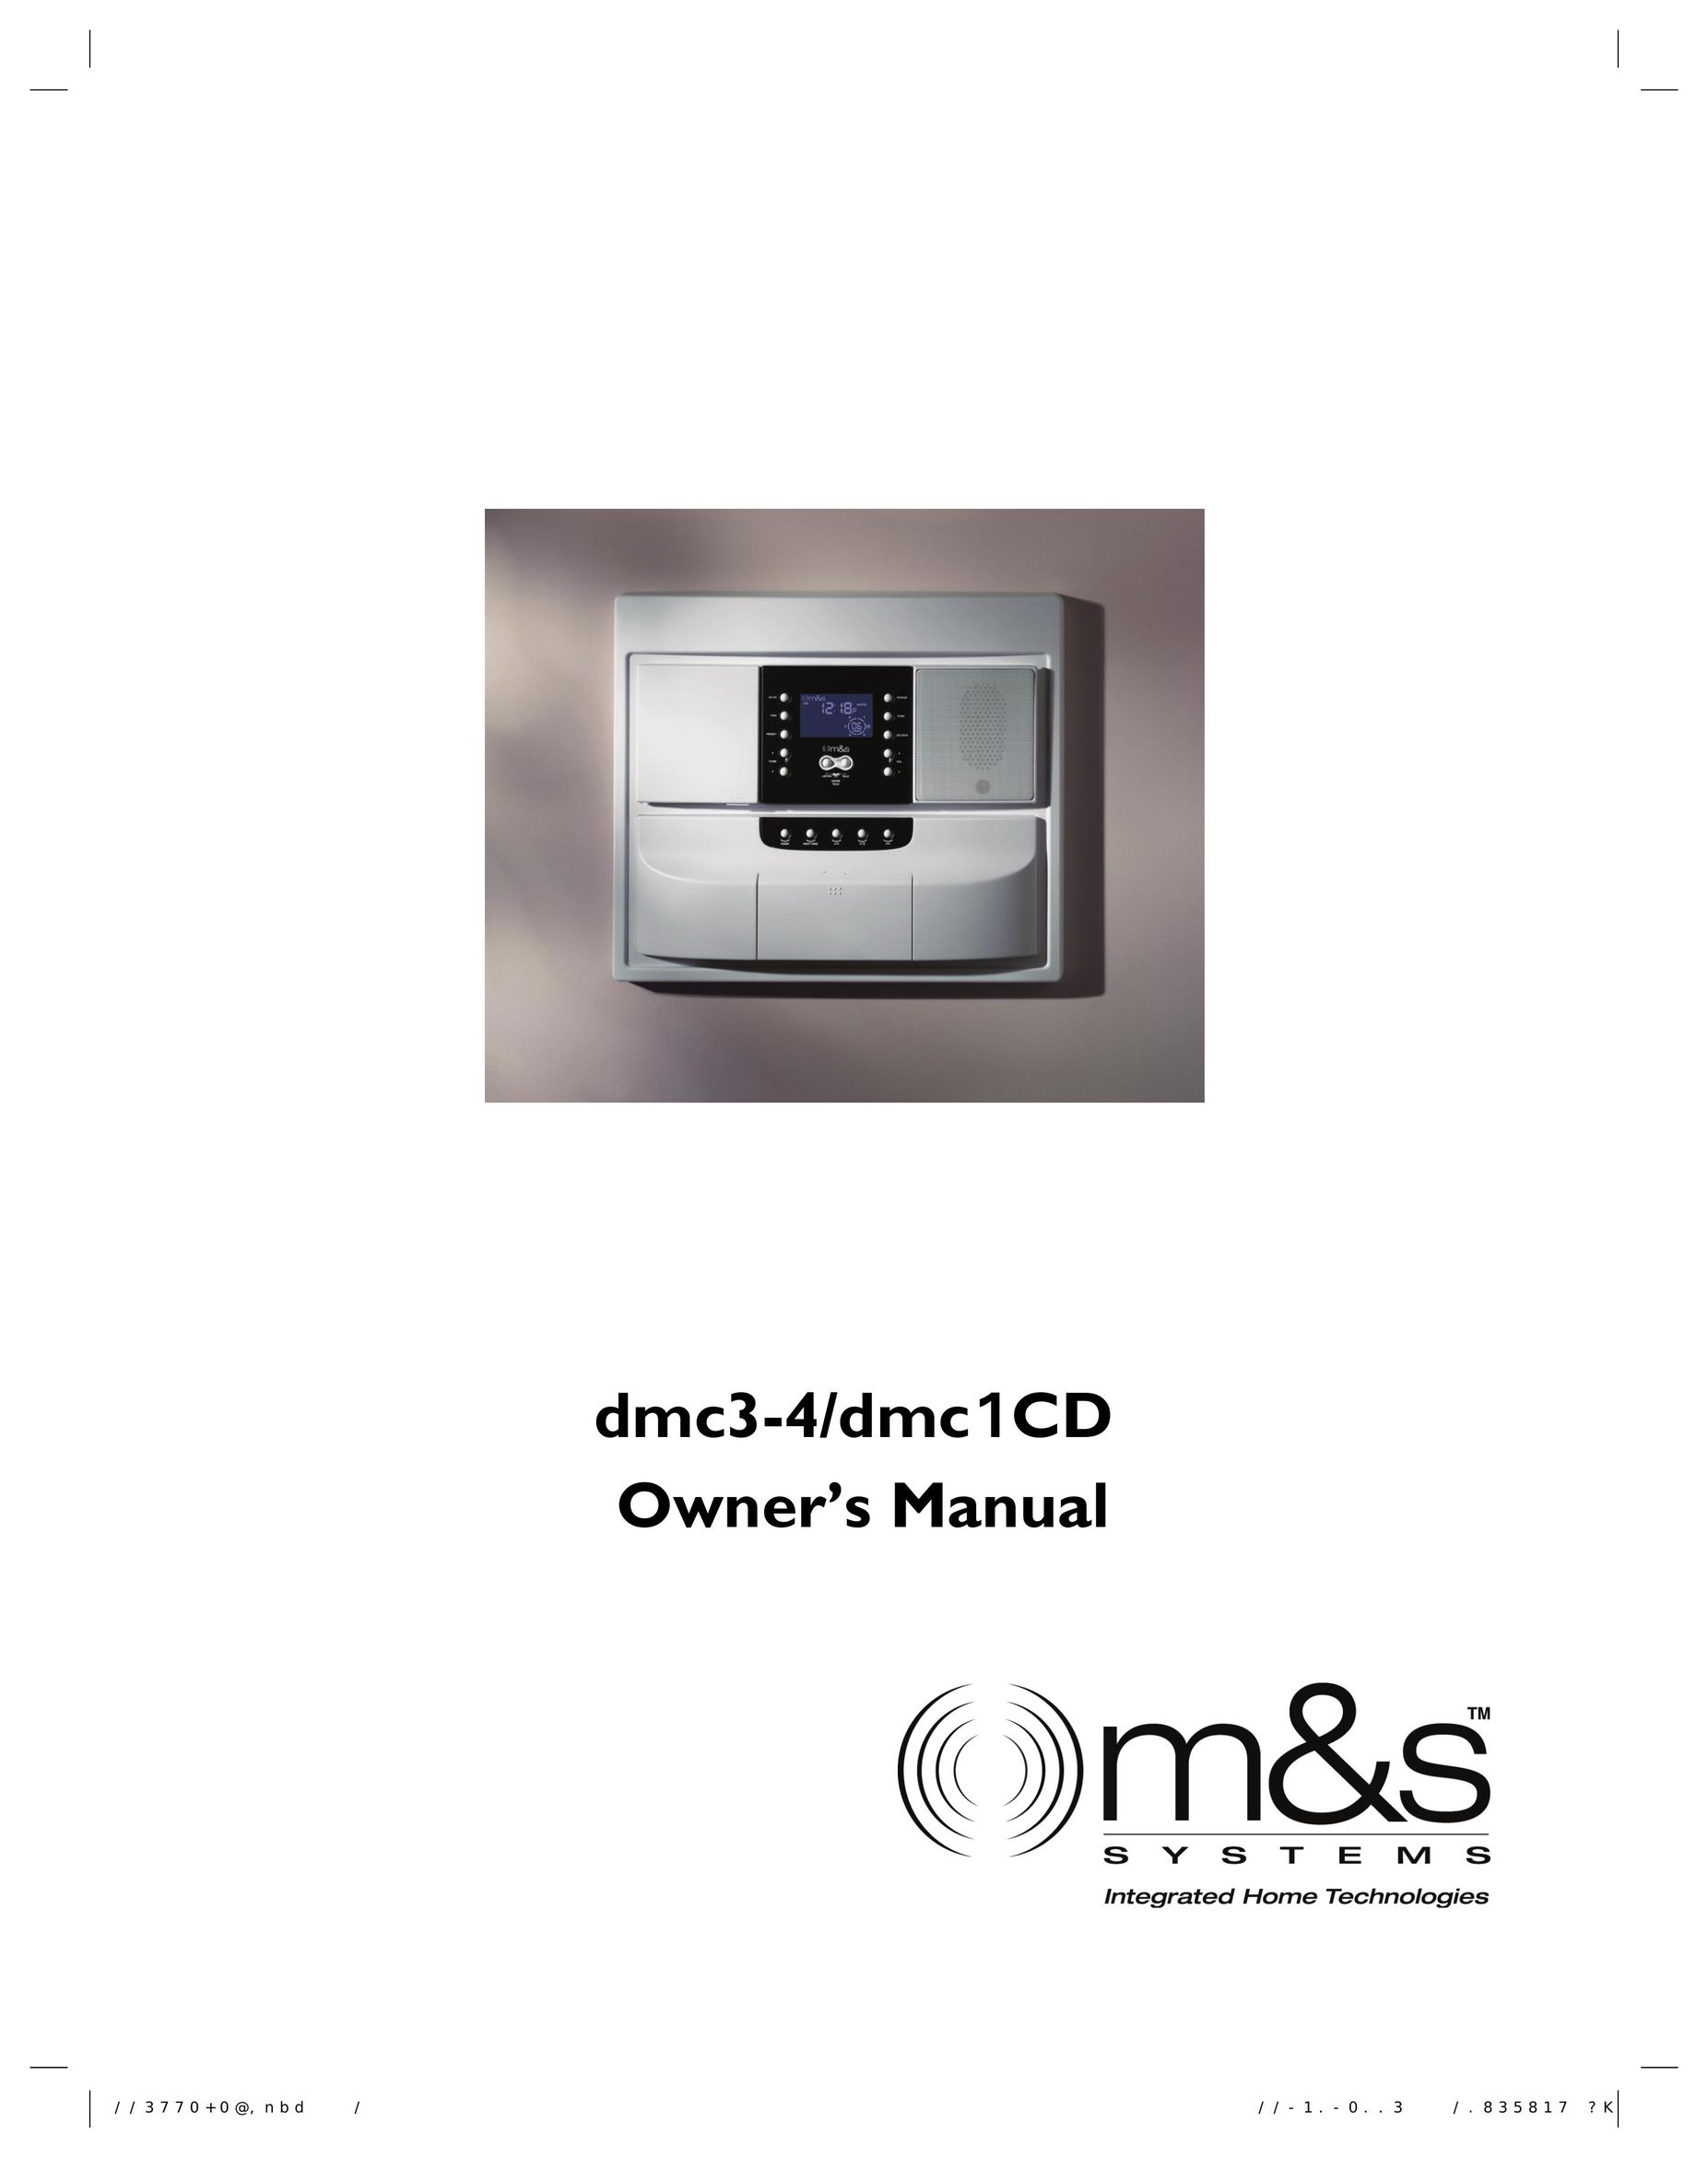 M&S Systems dmc3-4/dmc1 CD Player User Manual (Page 1)